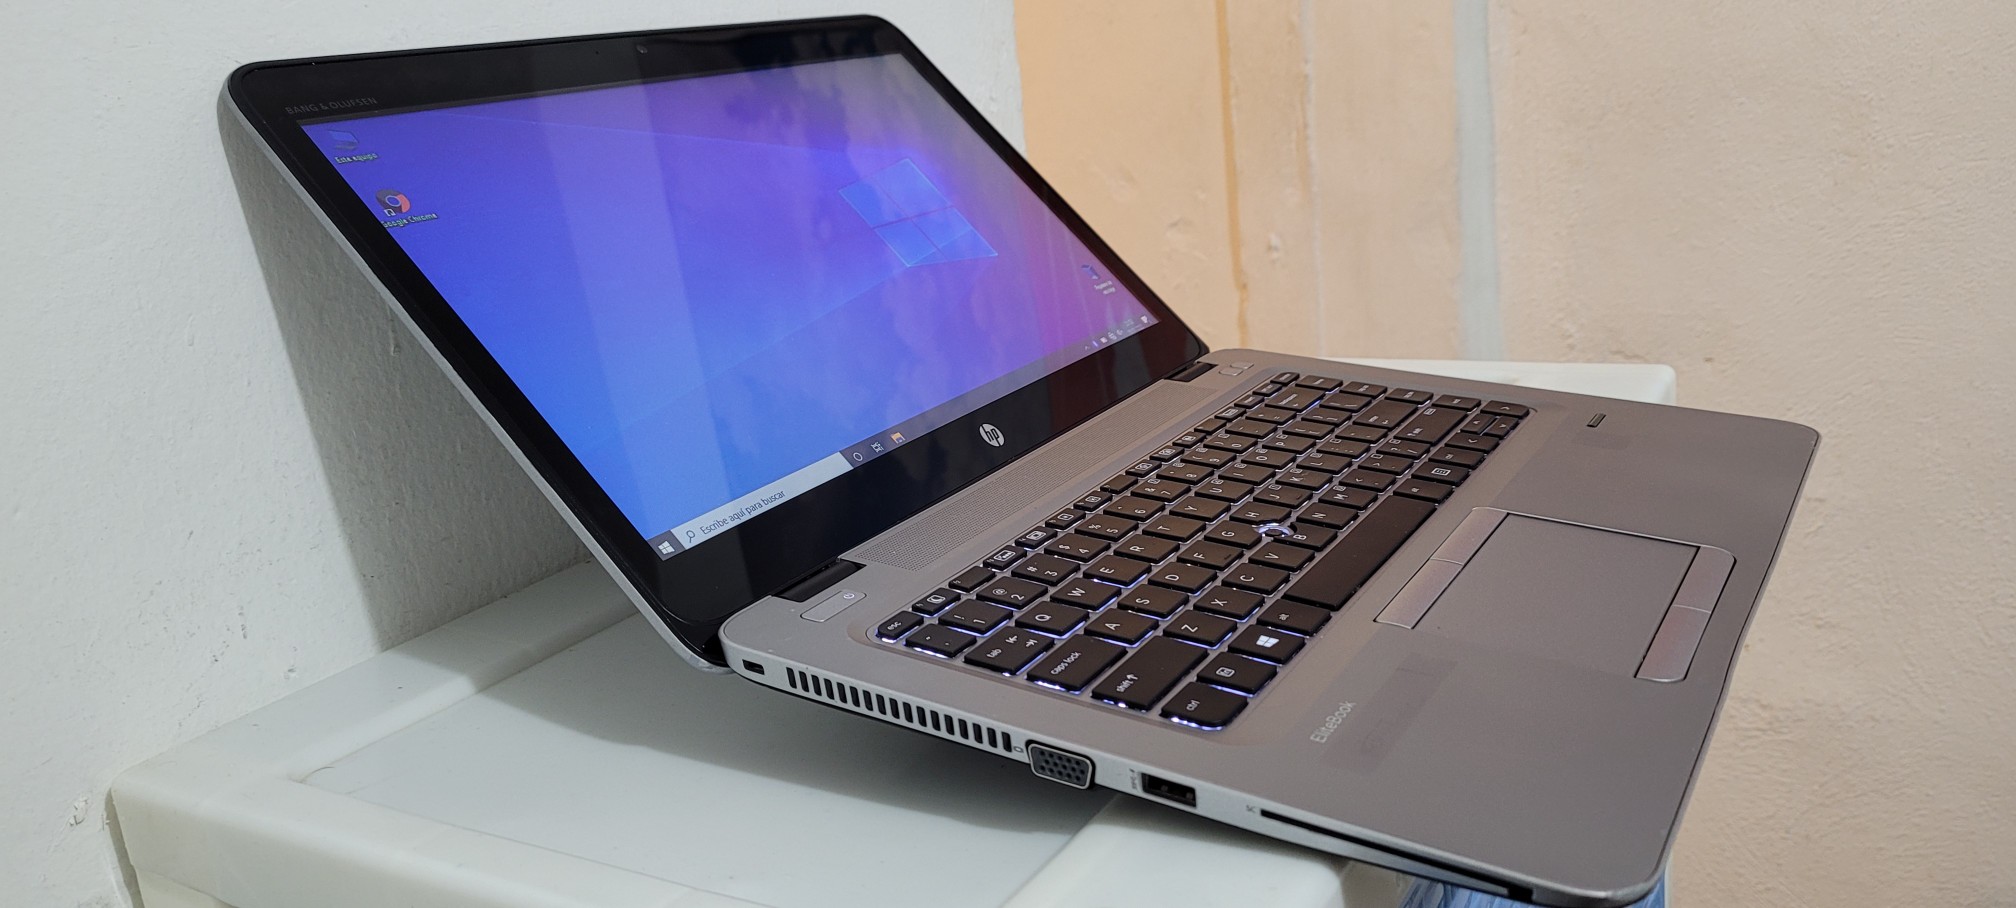 computadoras y laptops - Laptop hp EliteBooK 14 Pulg Core i5 7ma Gen Ram 8gb ddr4 SSD 500GB FULL 1